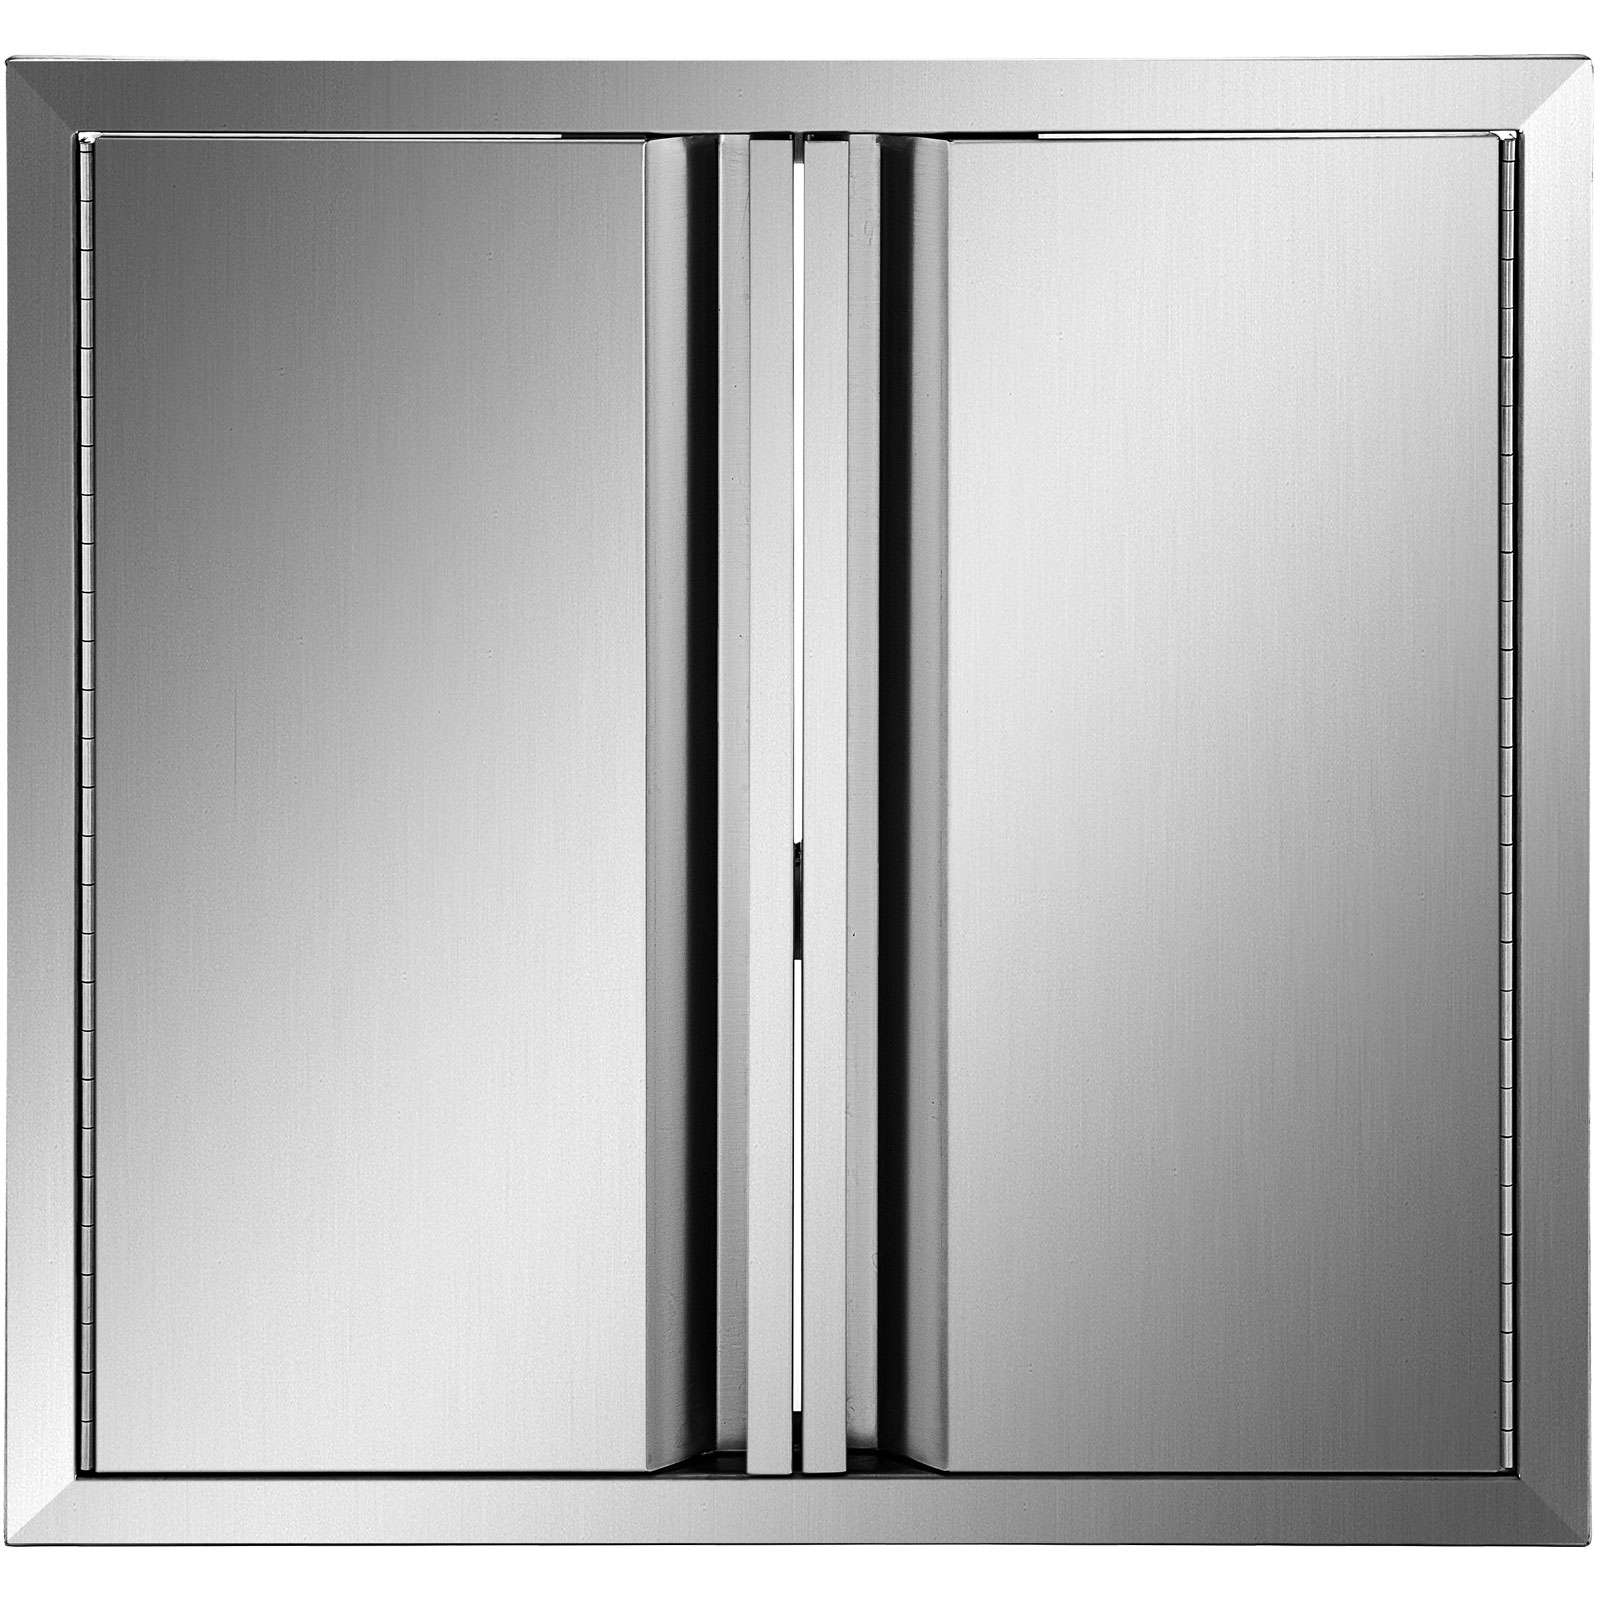 kitchen doors,stainless steel,30.5x21 inch